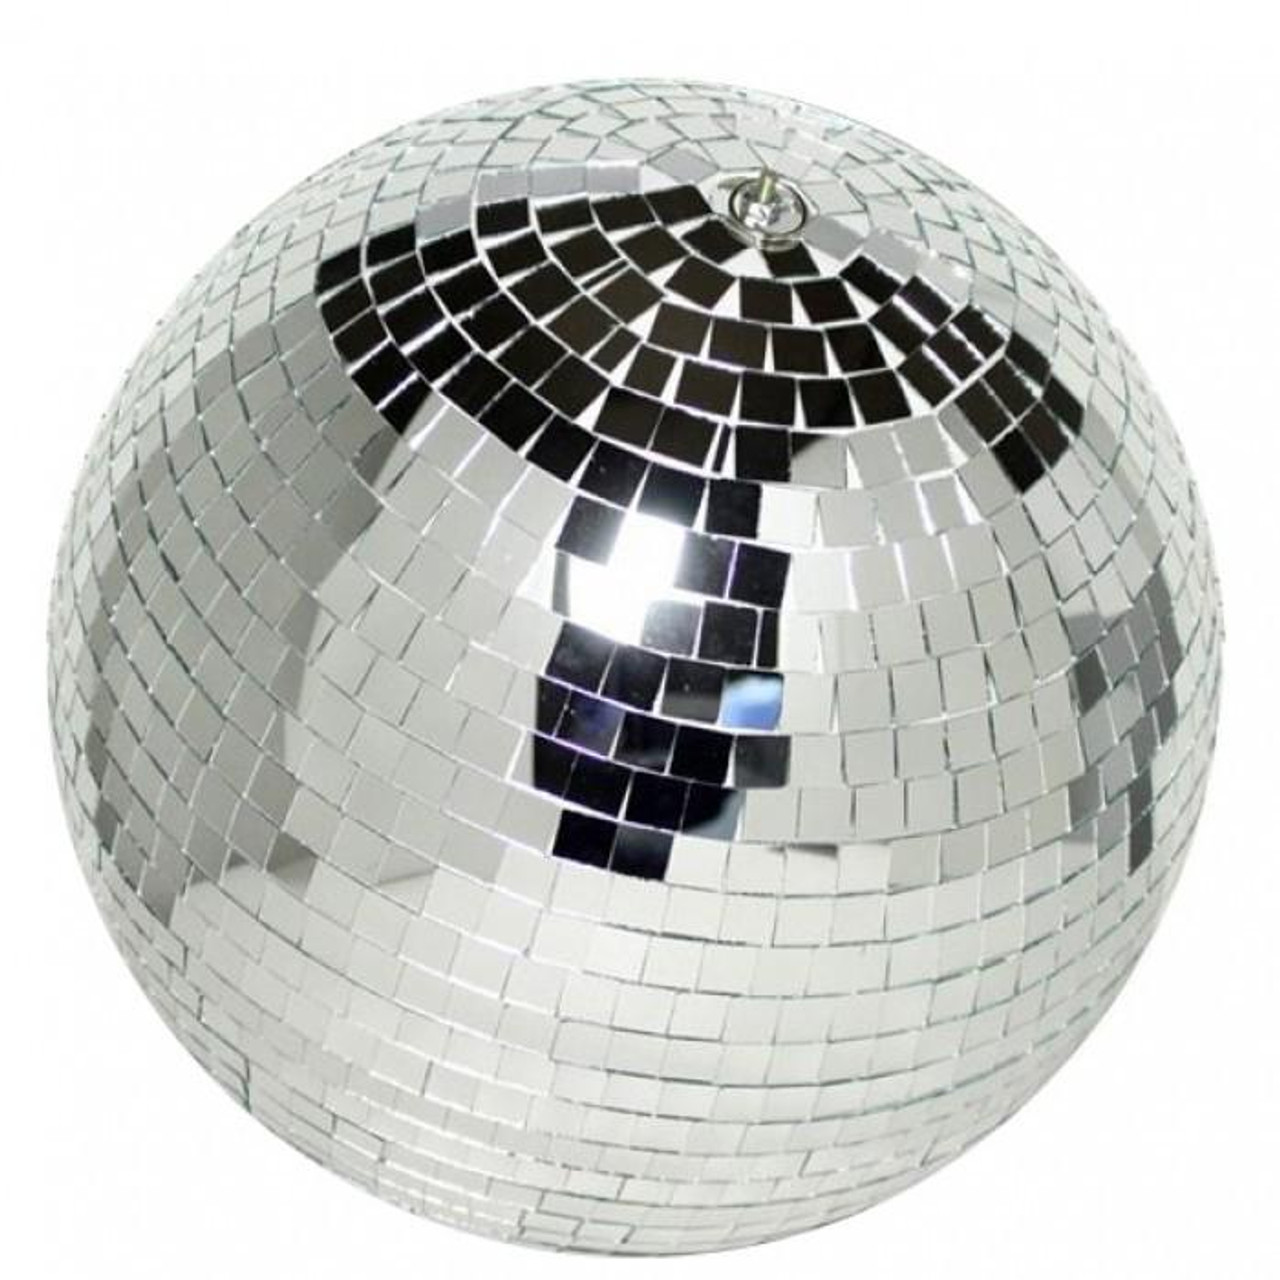 Disco Ball – Sensory Tool House, LLC